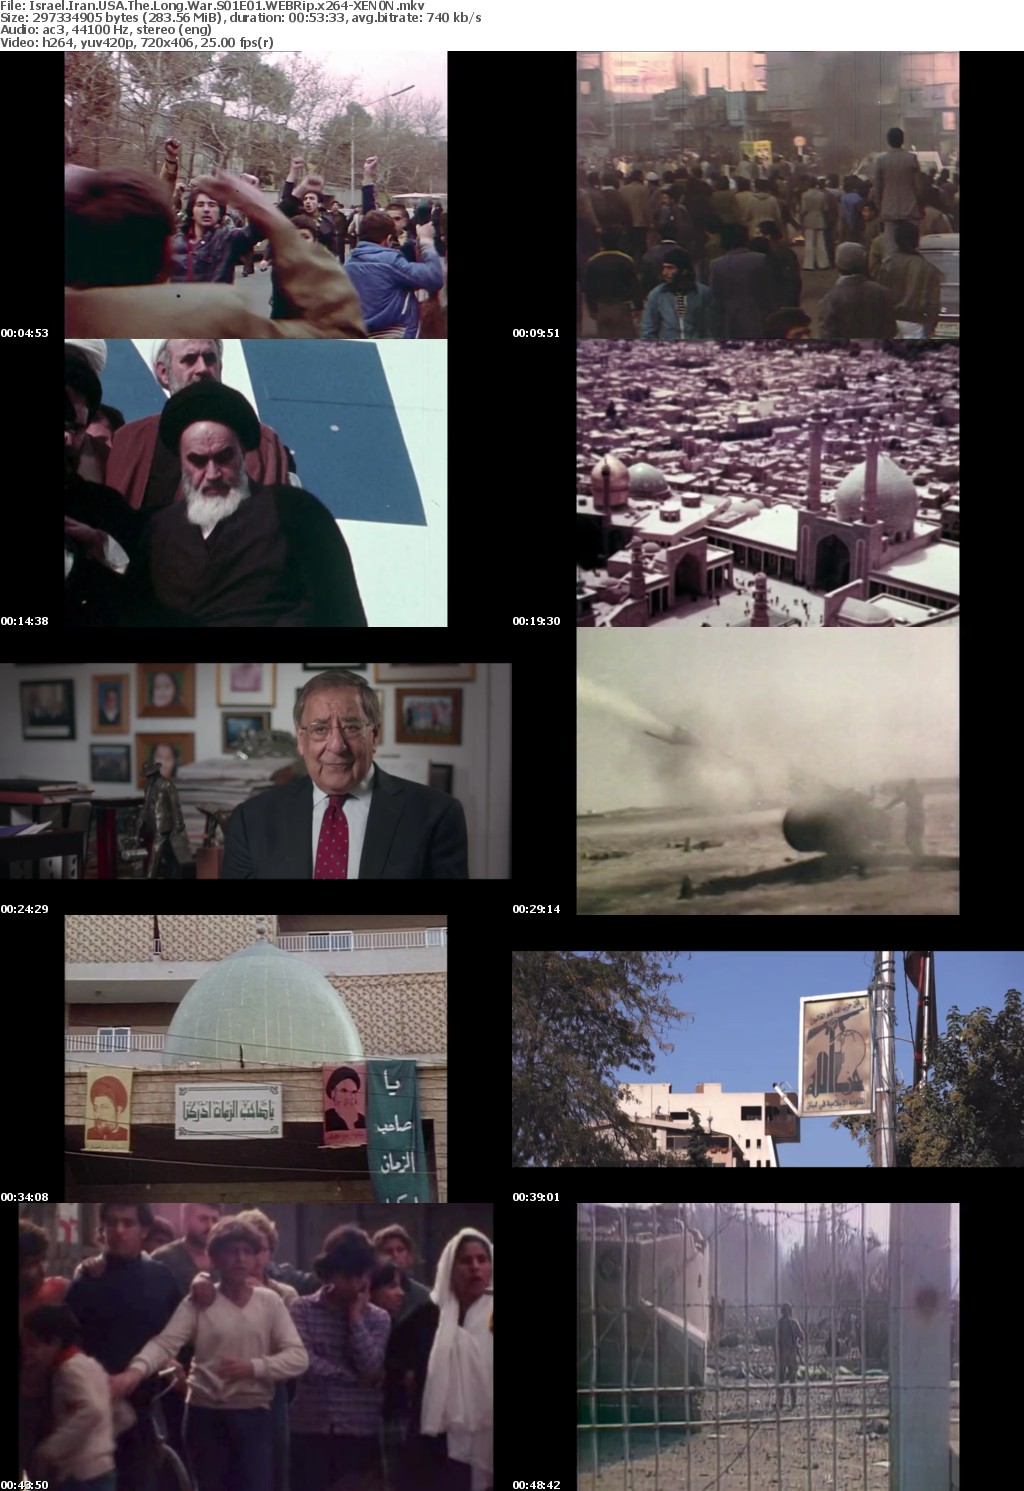 Israel Iran USA The Long War S01E01 WEBRip x264-XEN0N